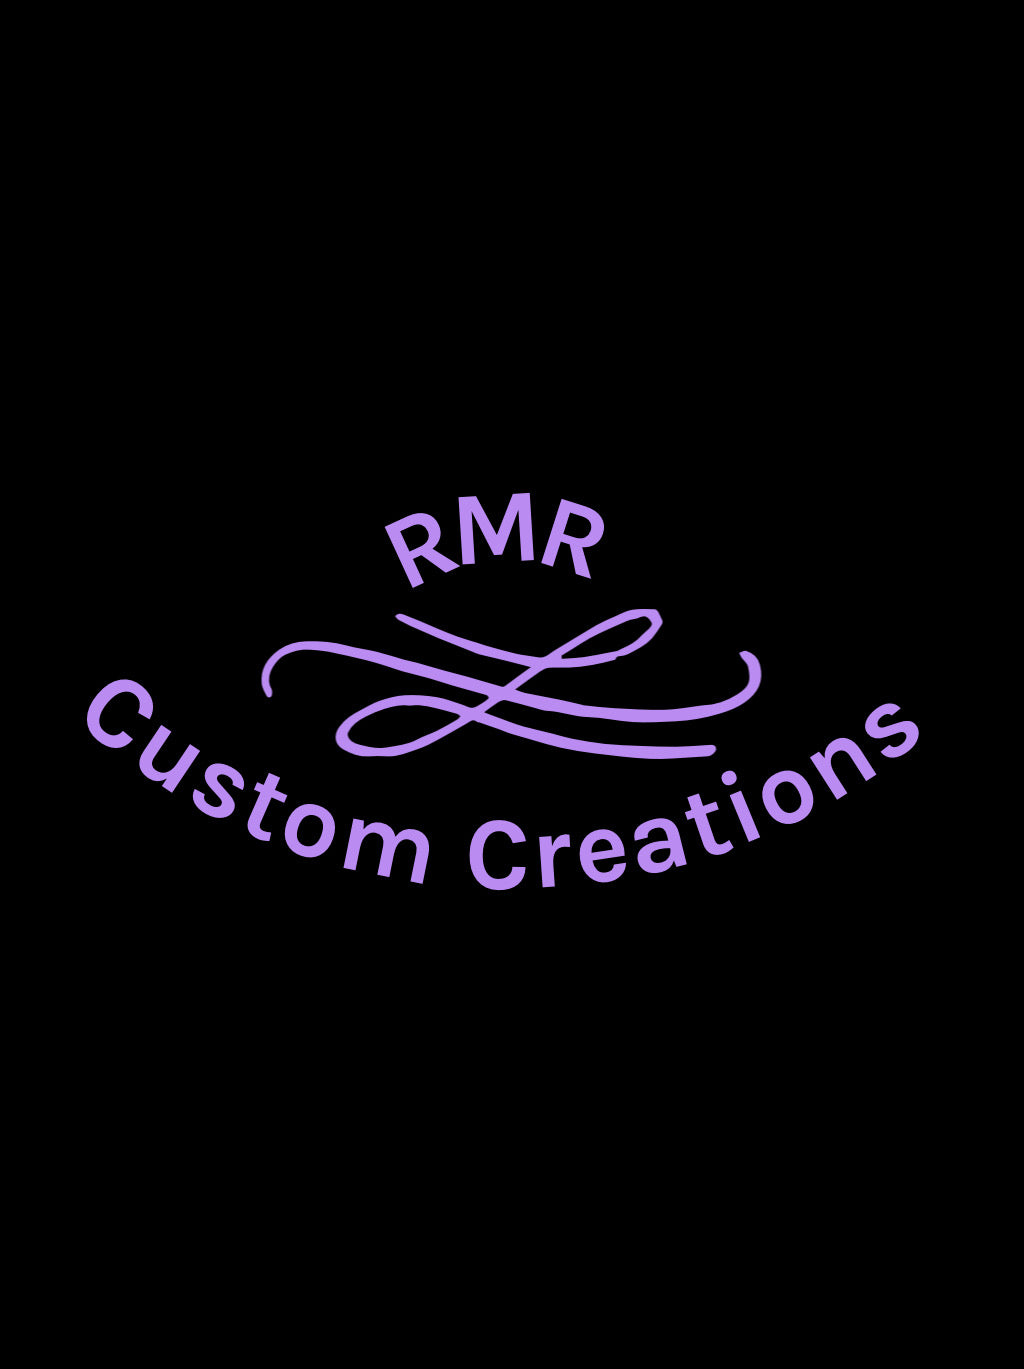 RMR Custom Creations